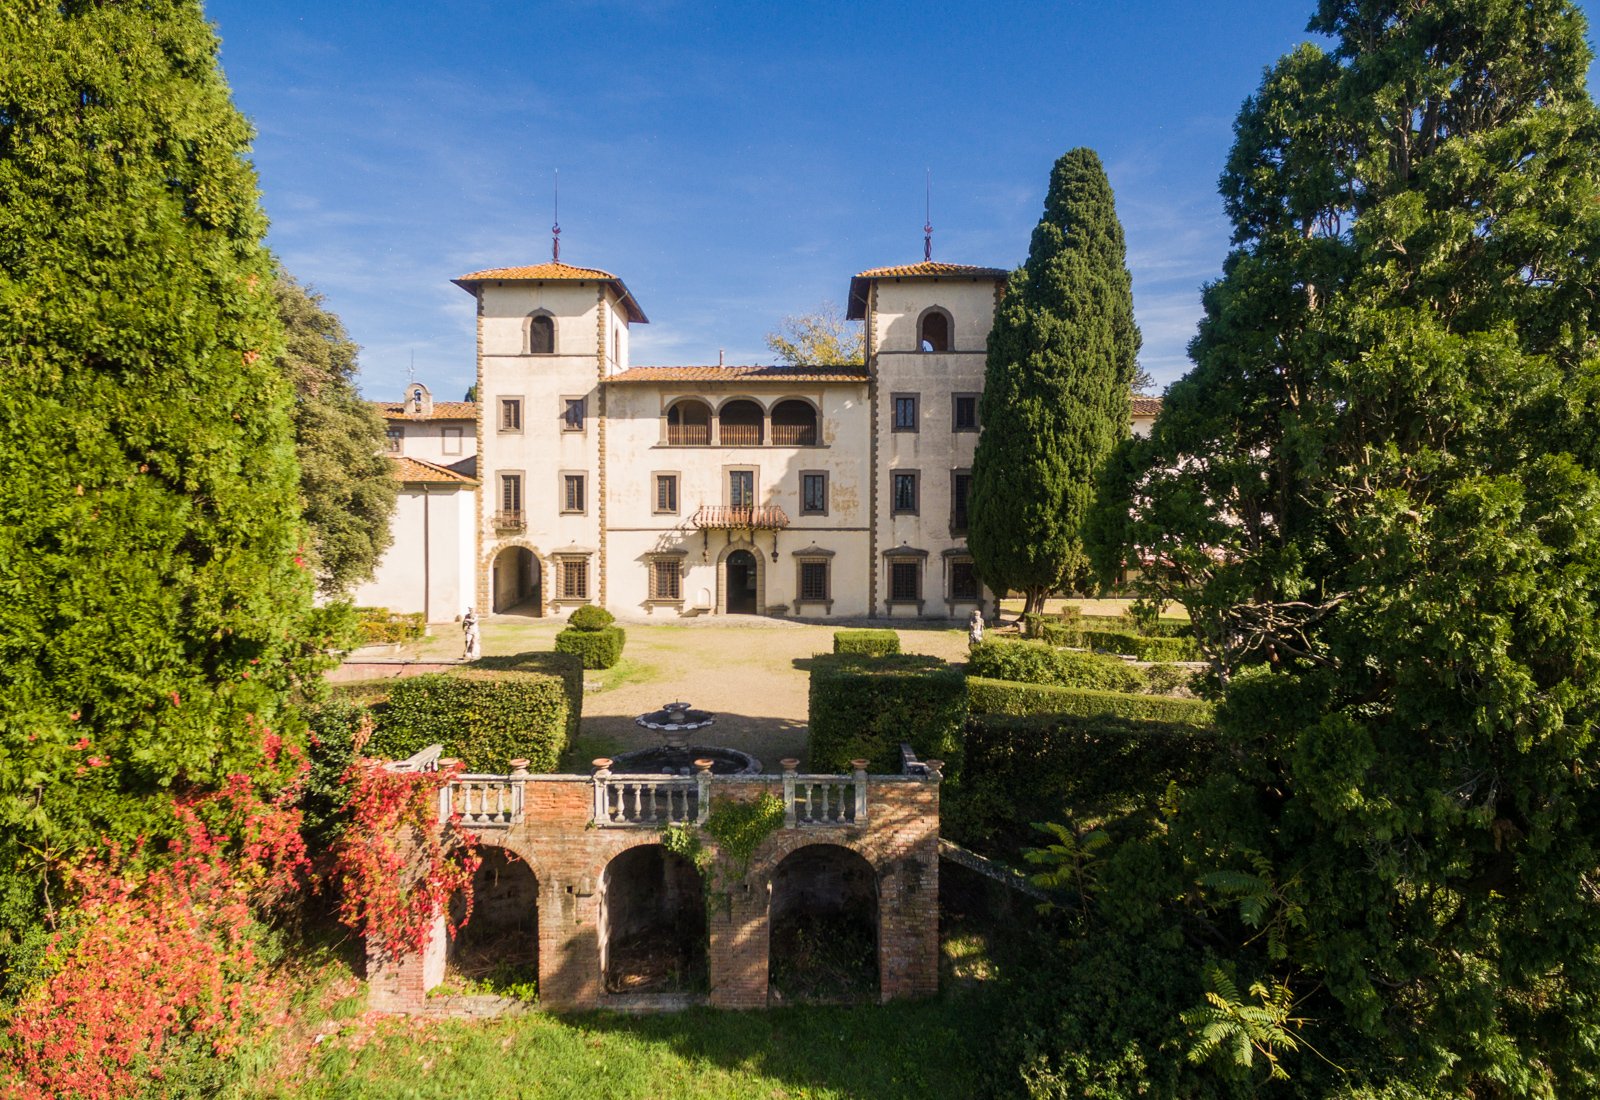 Francis+York+ Tuscan Villa Rental Surrounded by Botanical Park Near Florence, Italy  00001.jpeg